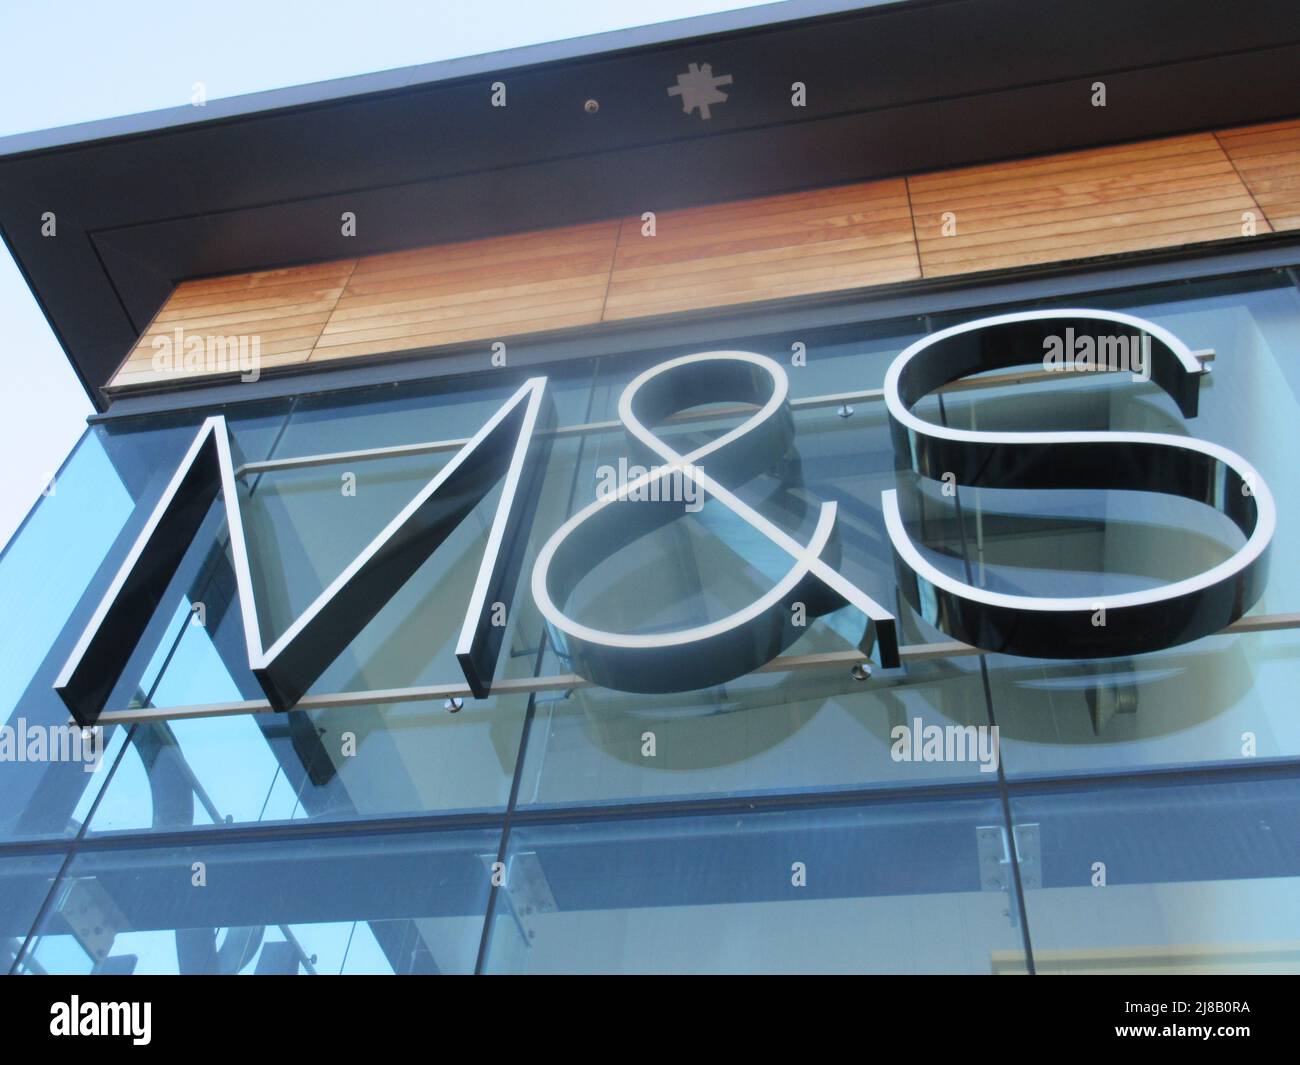 M&S Retail Shop Sign Stock Photo